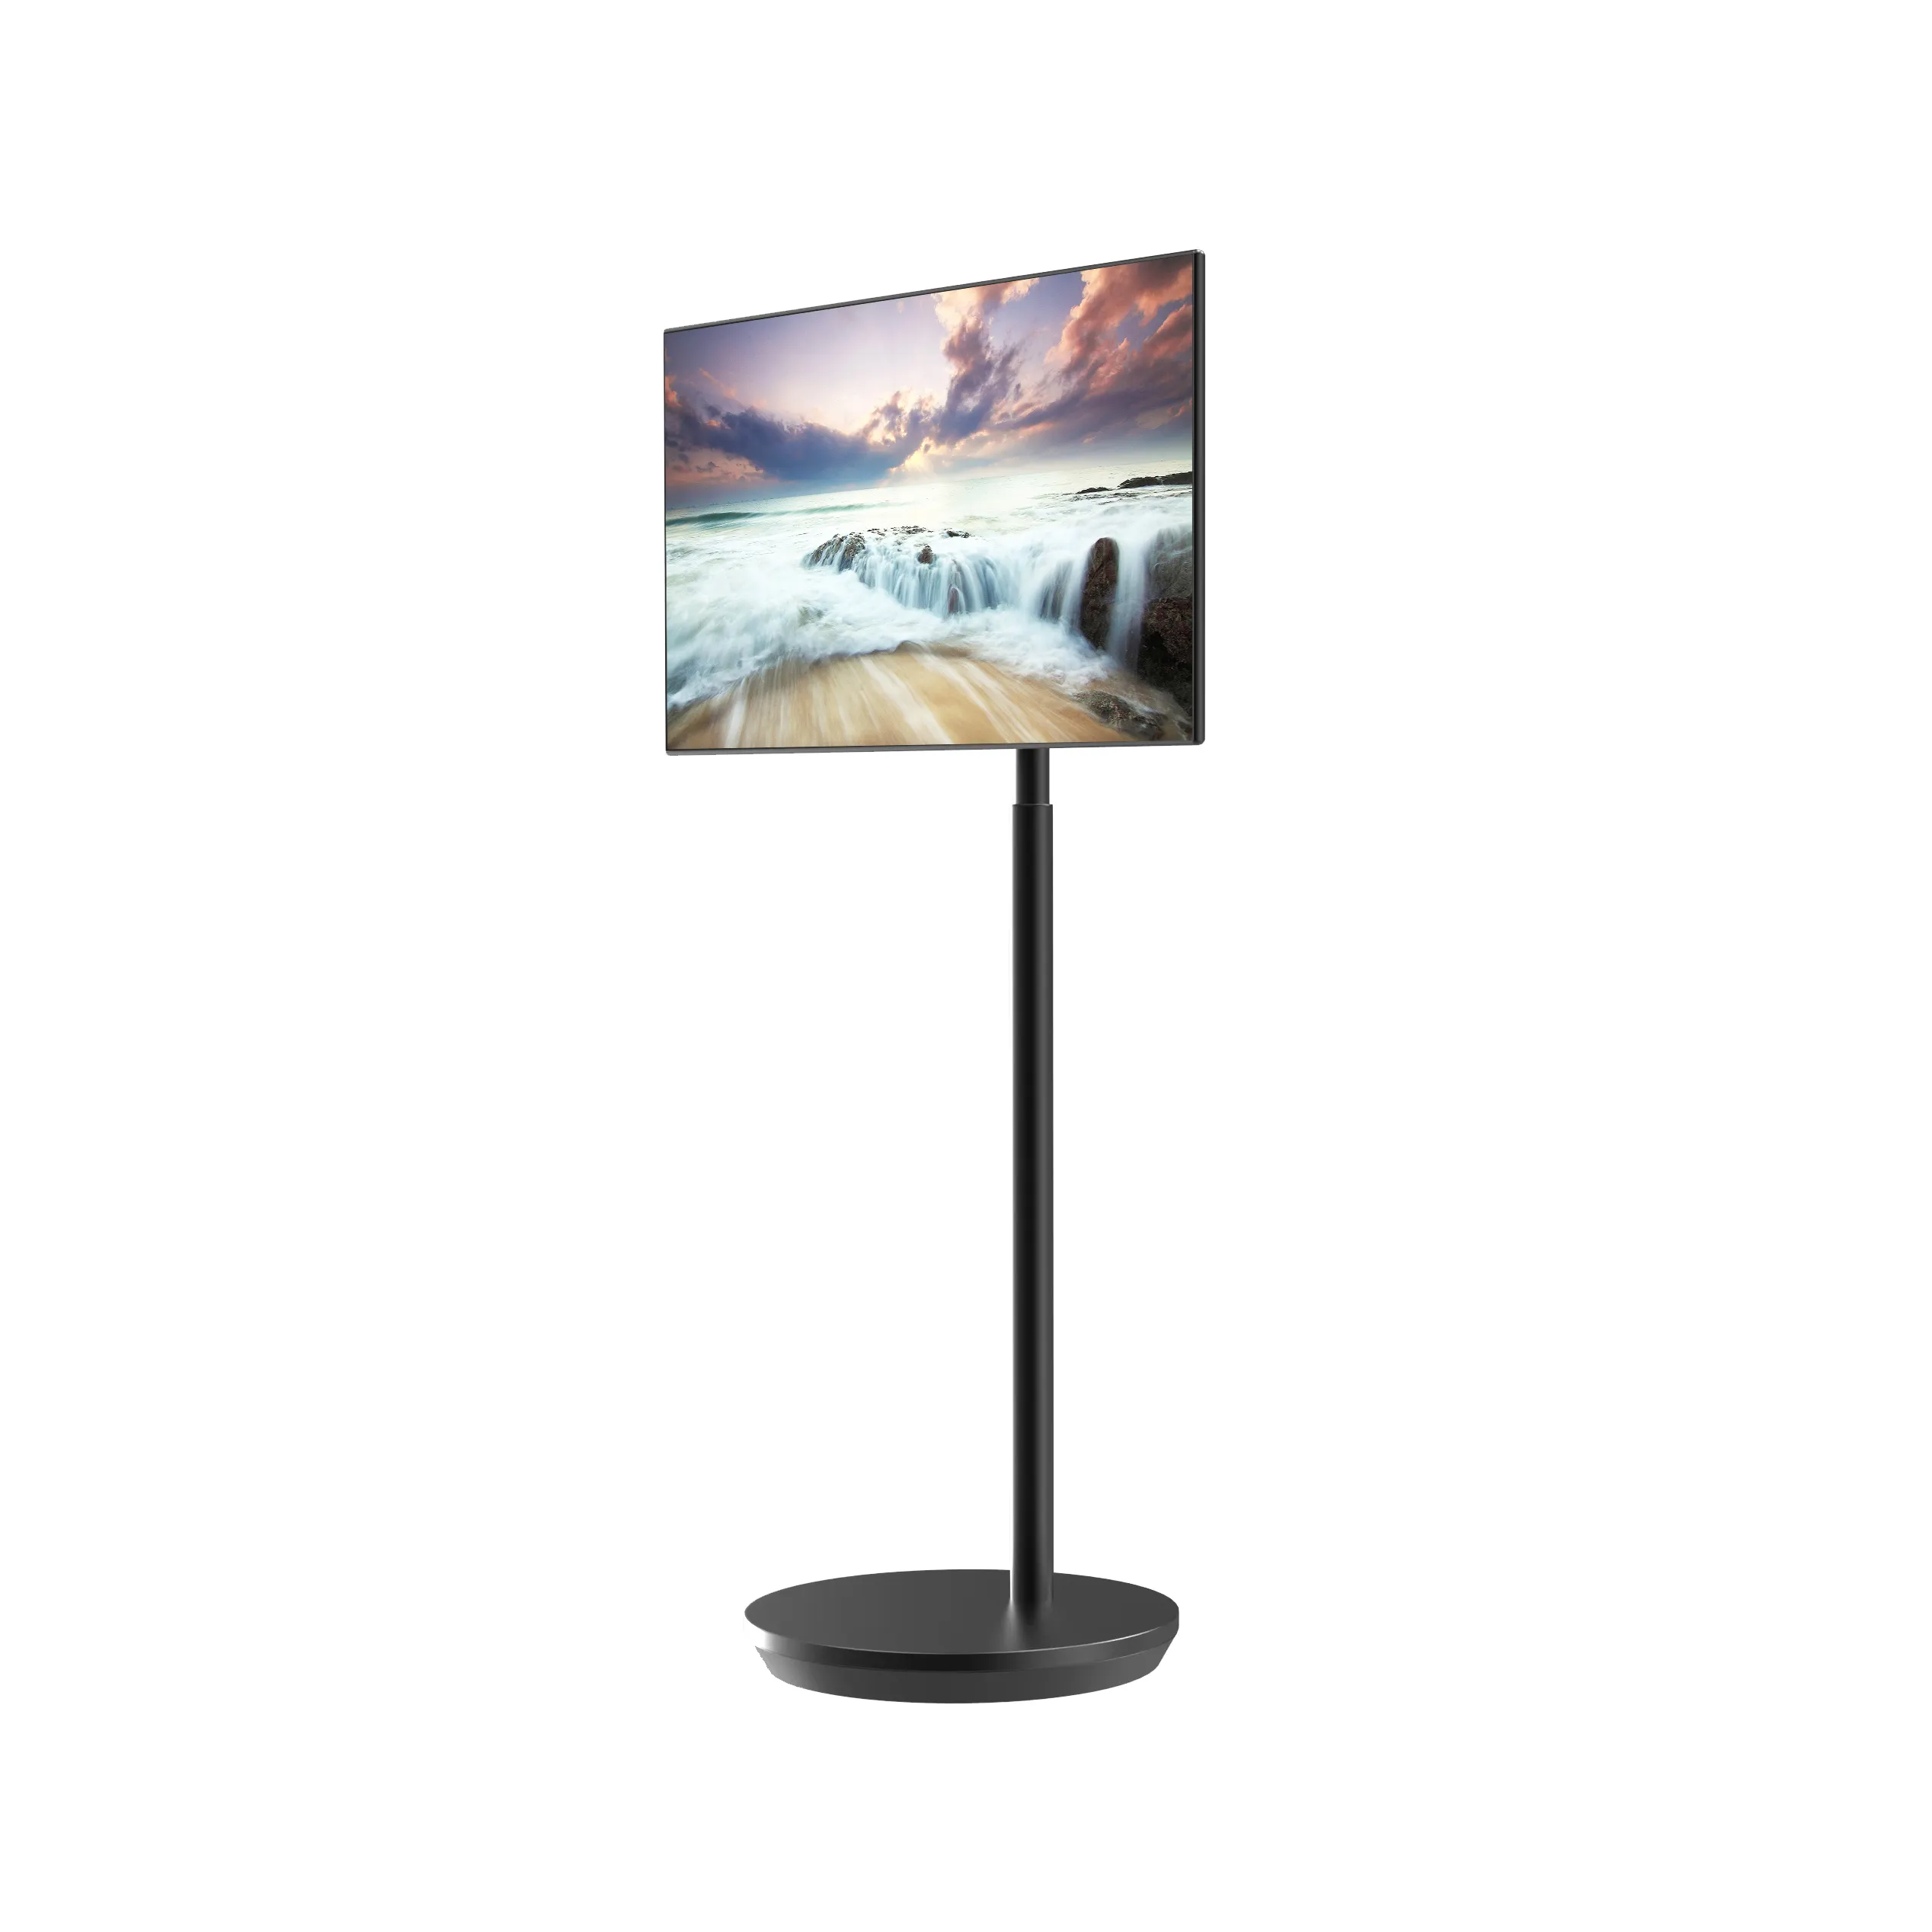 Precio de fábrica Smart Home Display Monitor de pantalla táctil de 21,5 pulgadas Pantalla inteligente LCD portátil